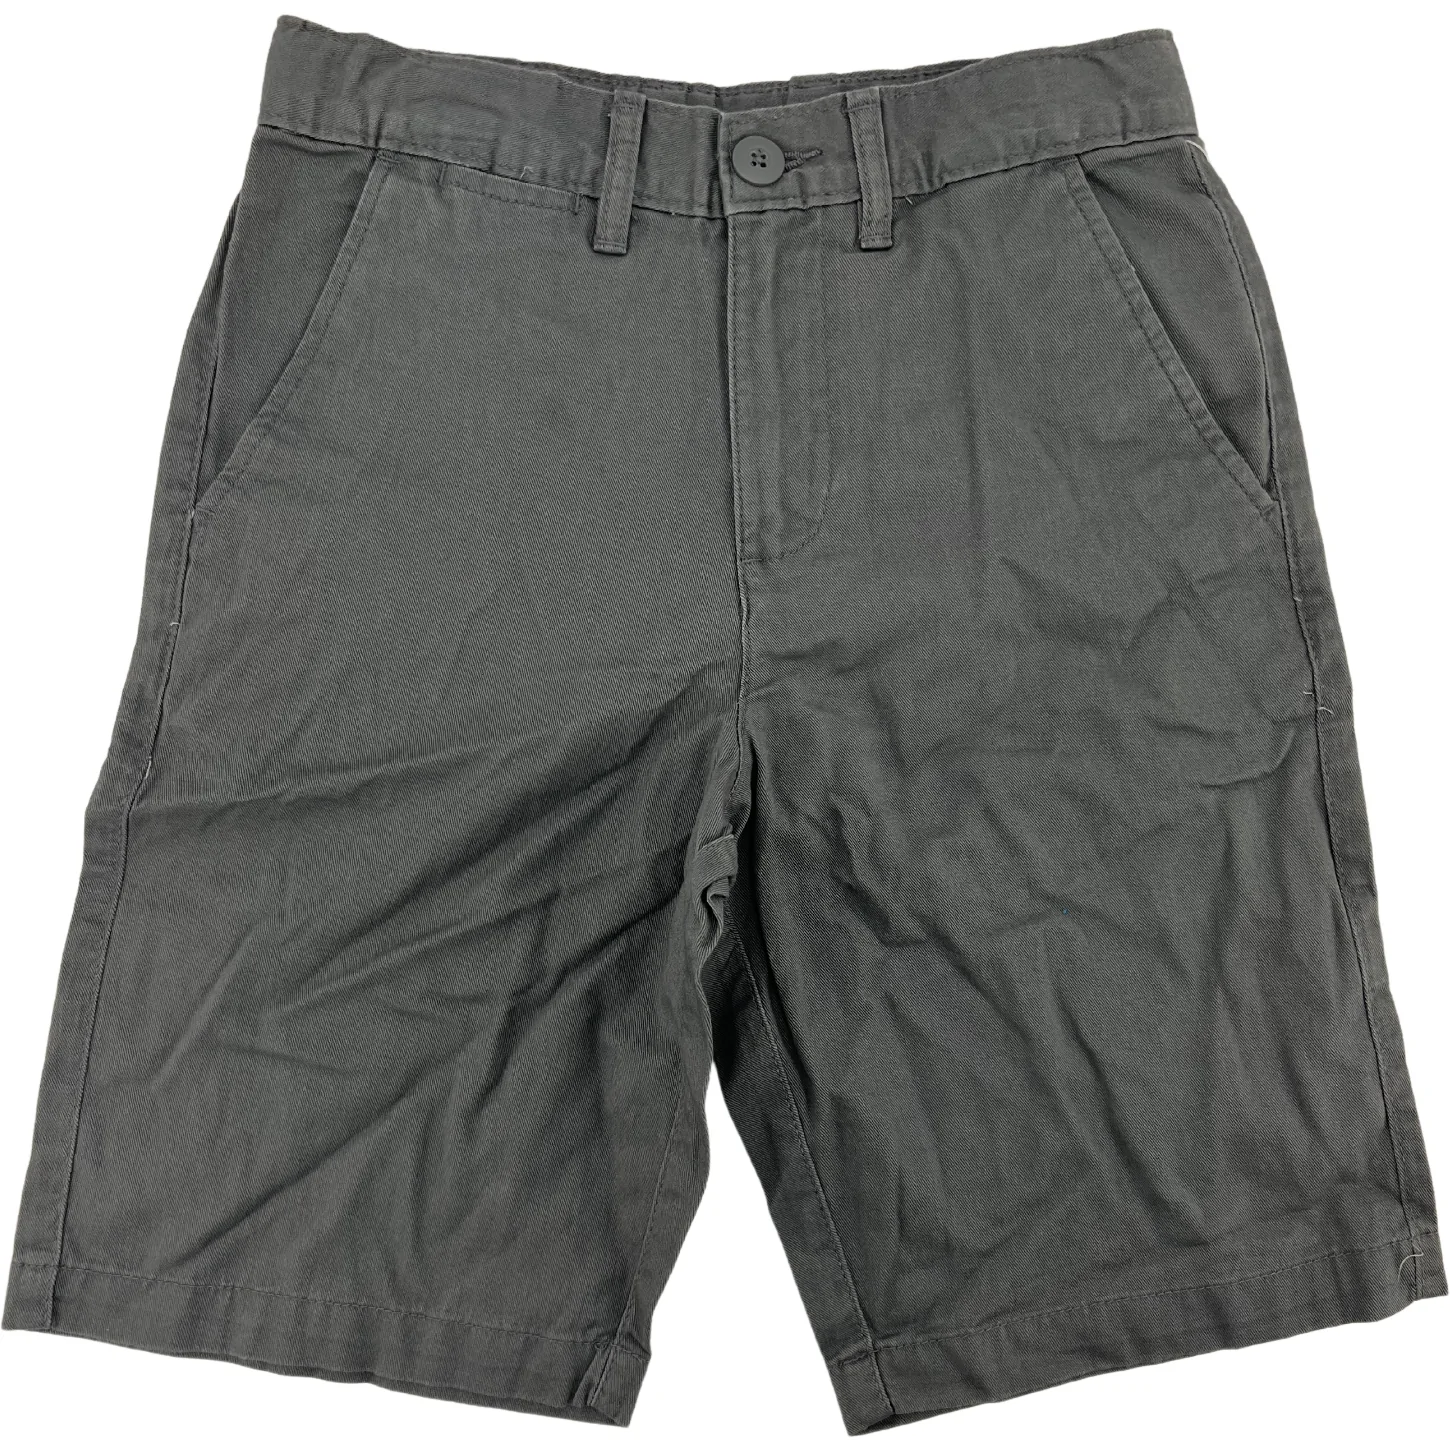 Simply Styled Children's Shorts / Boy's Cargo Shorts / Grey / Size 12